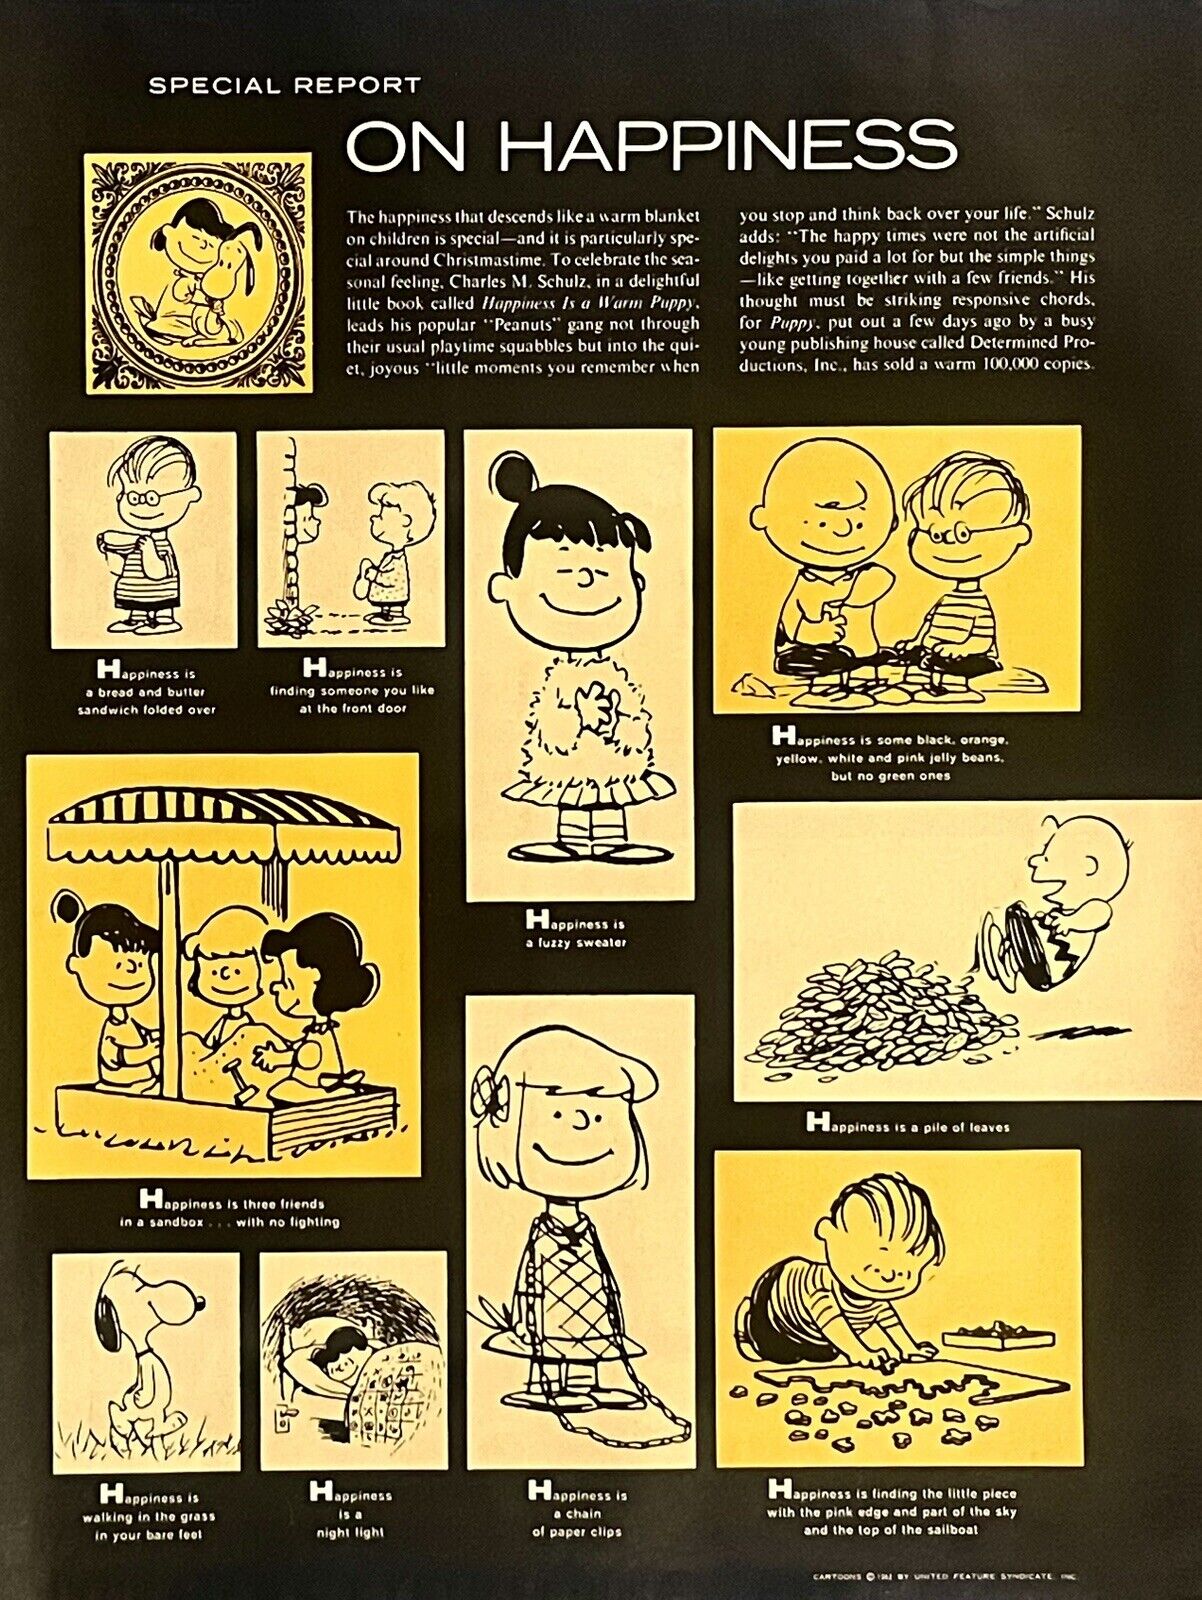 1962 Vtg Print Ad Peanuts Charlie Brown Retro Comics Home Kitchen MCM Wall Art